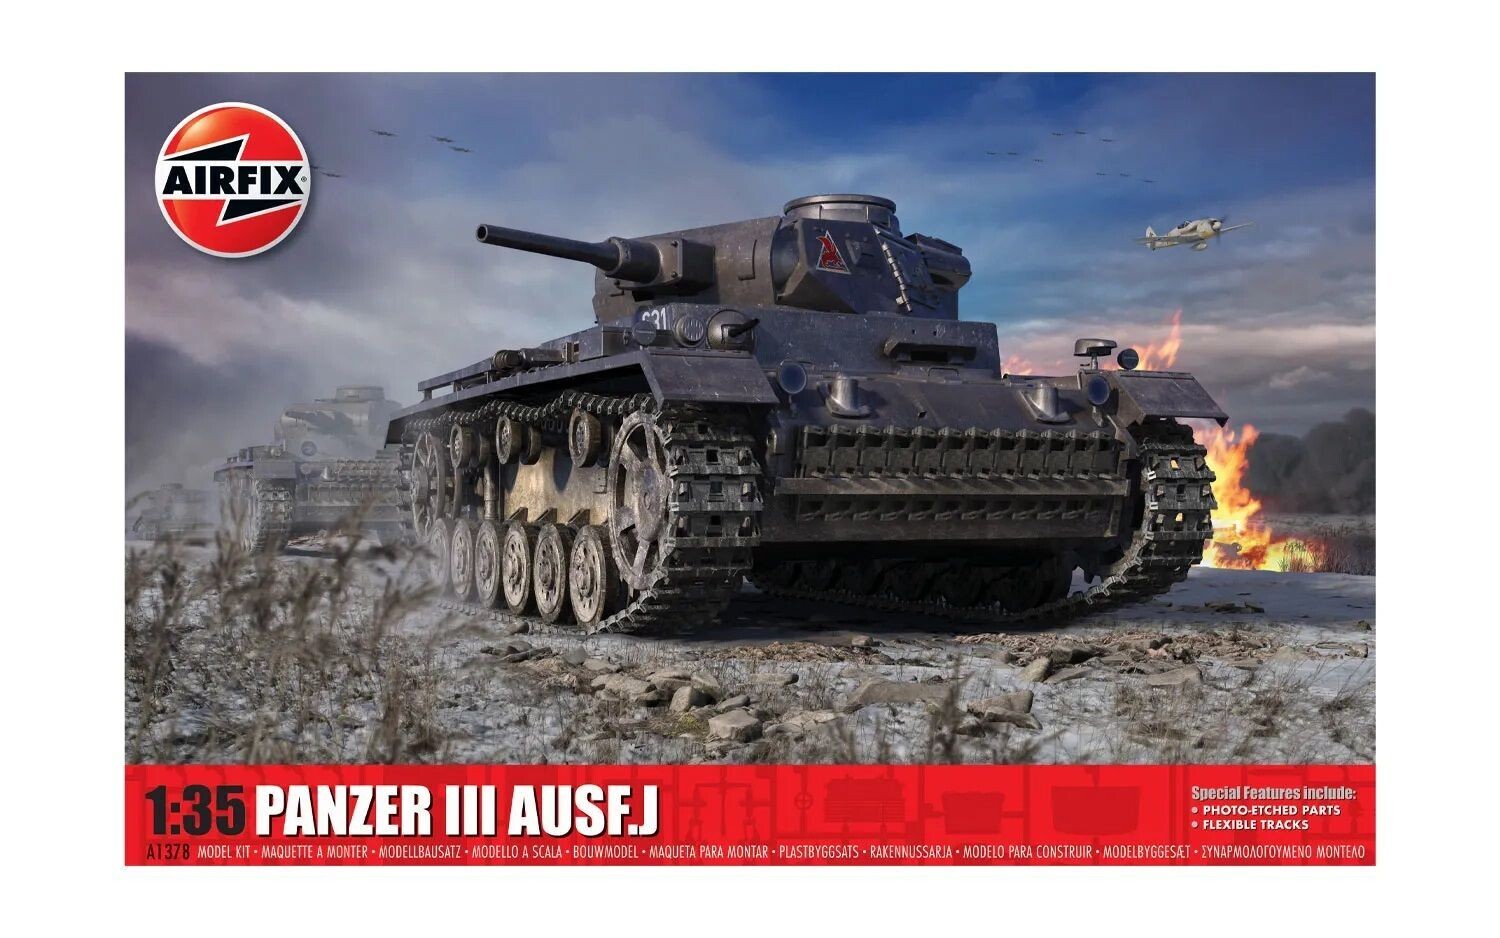 Airfix A1378 Panzer III AUSF J 1:35 Scale Plastic Model Kit